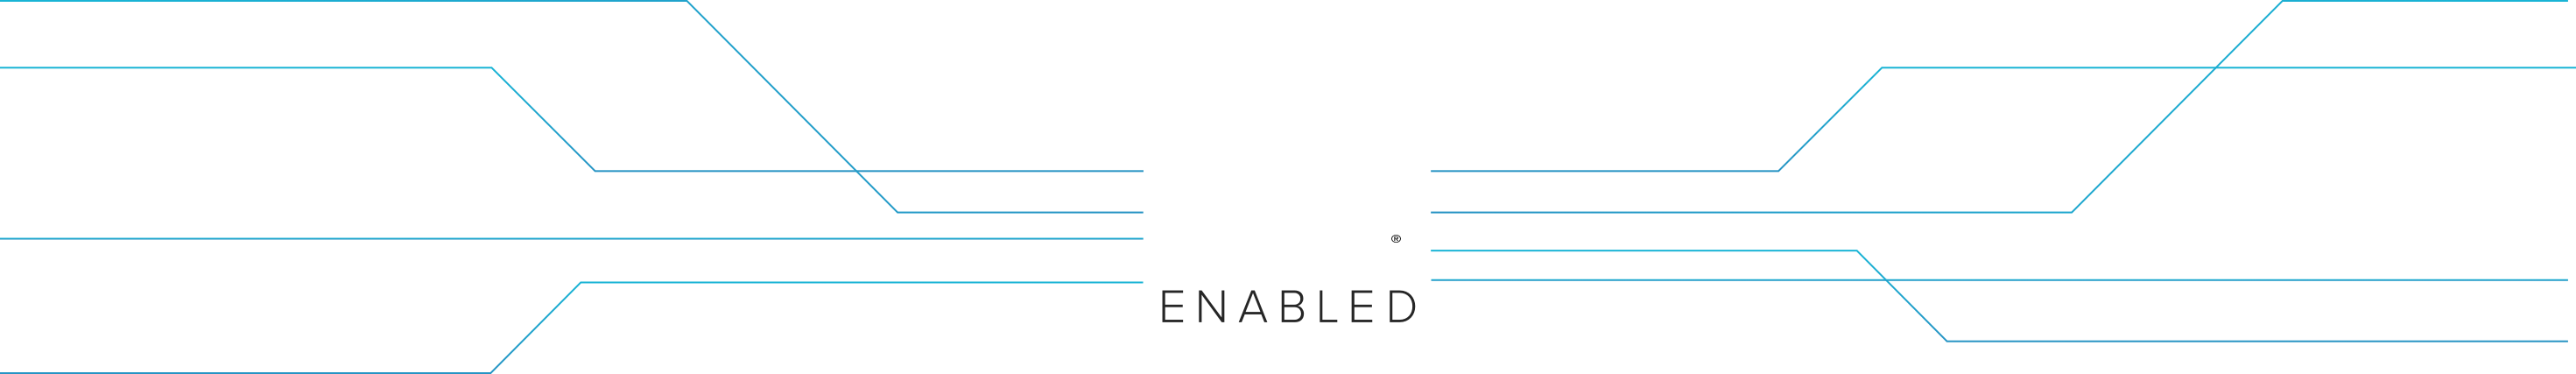 mx enabled logo lines large